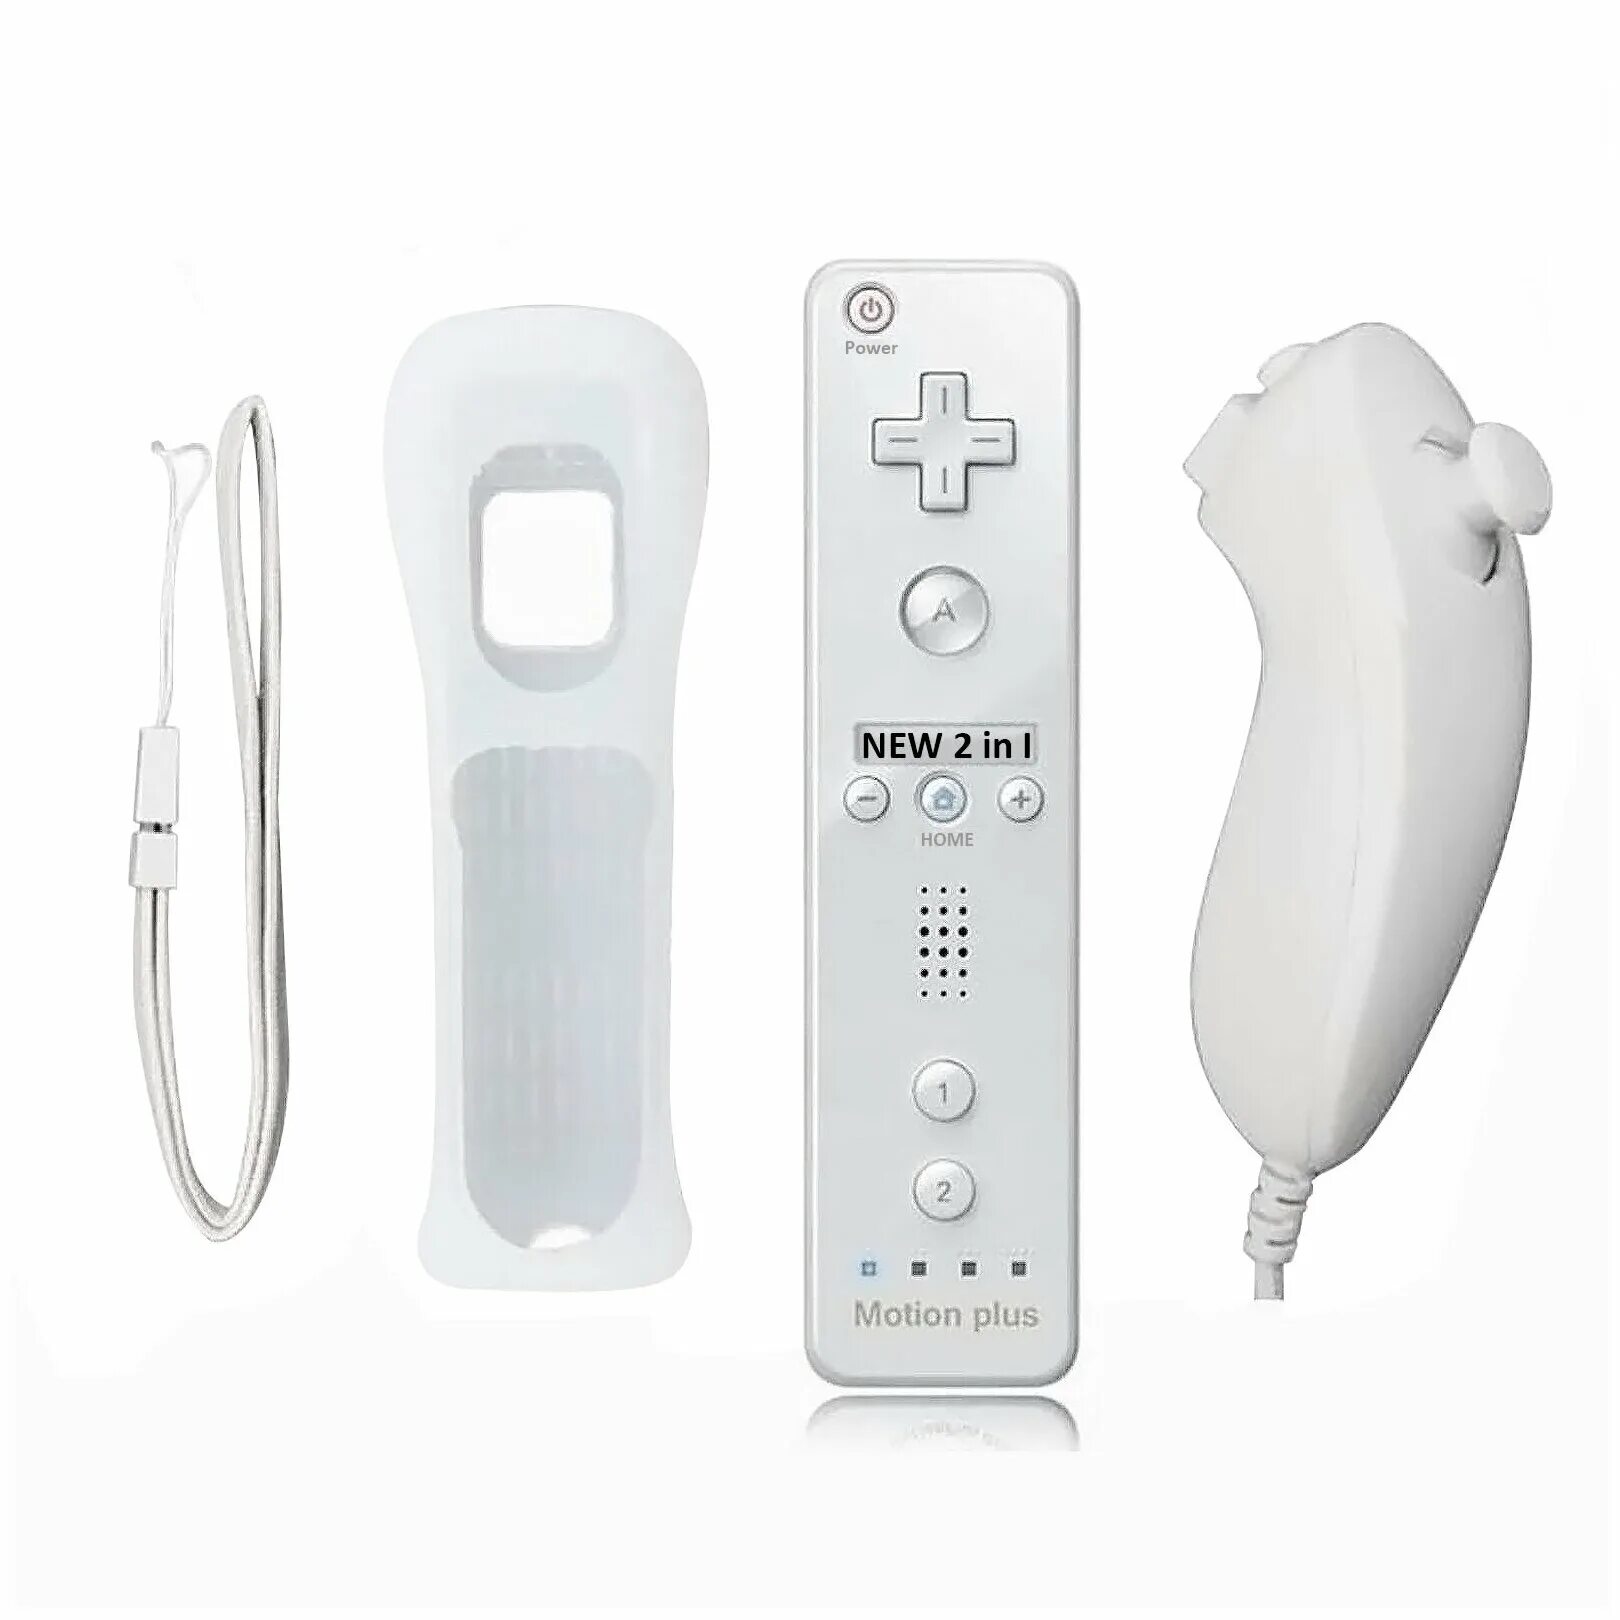 Nintendo Wii Nunchuk. Wii Remote Nunchuk. Remote Plus Wii Nunchuk. Nintendo Wii Controller.